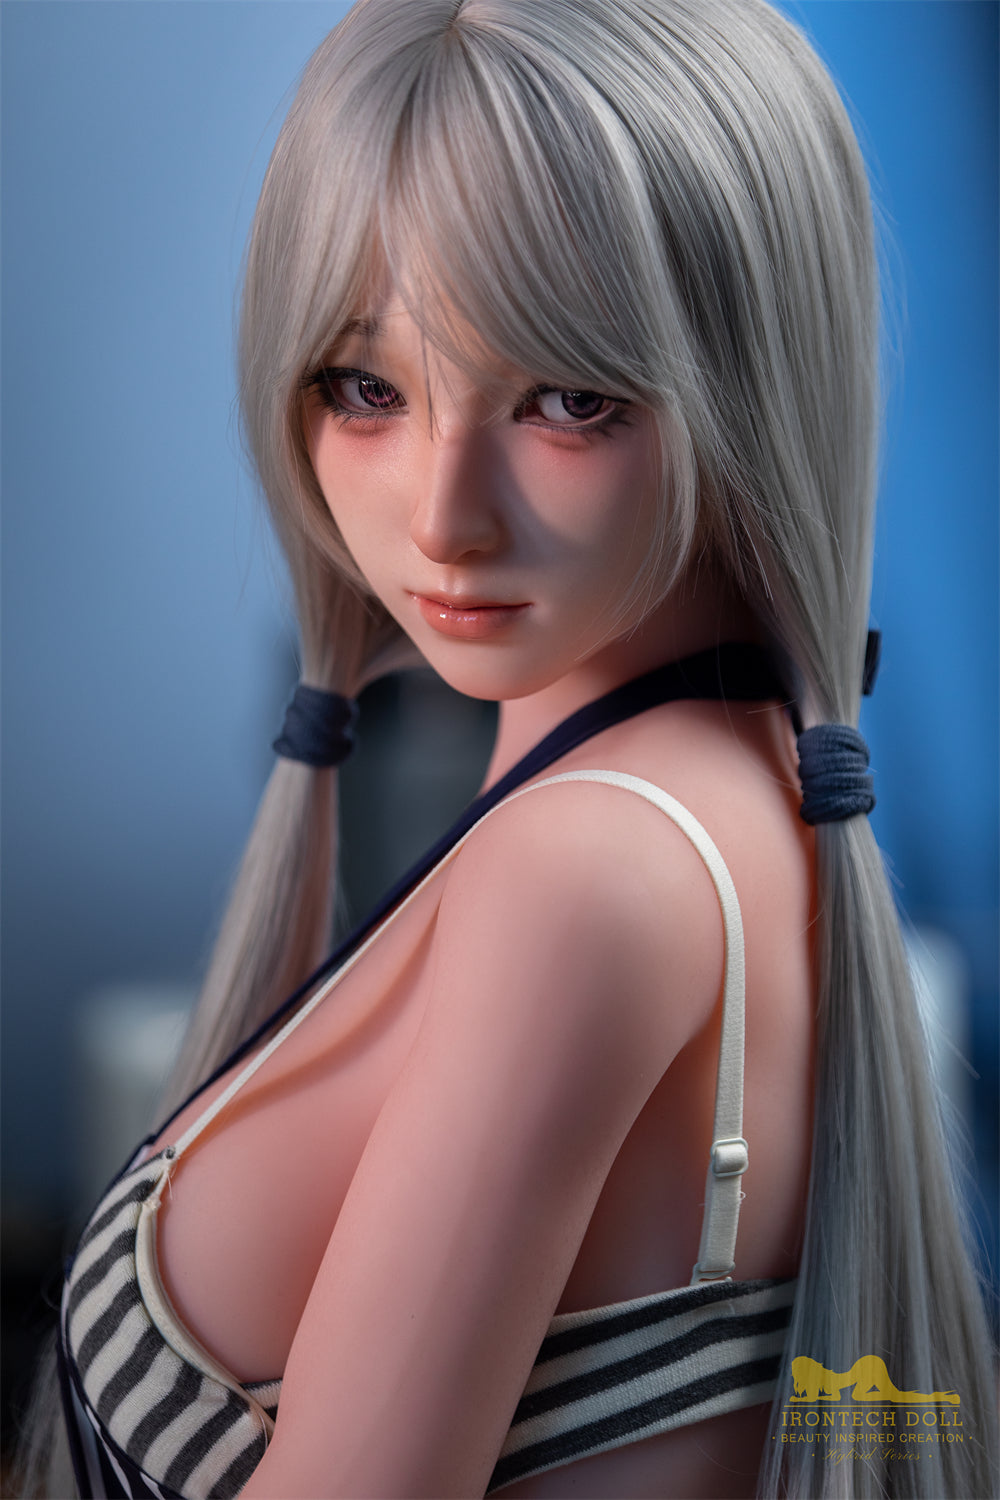 Irontech Doll 154 cm F Fusion - Miyuki | Buy Sex Dolls at DOLLS ACTUALLY